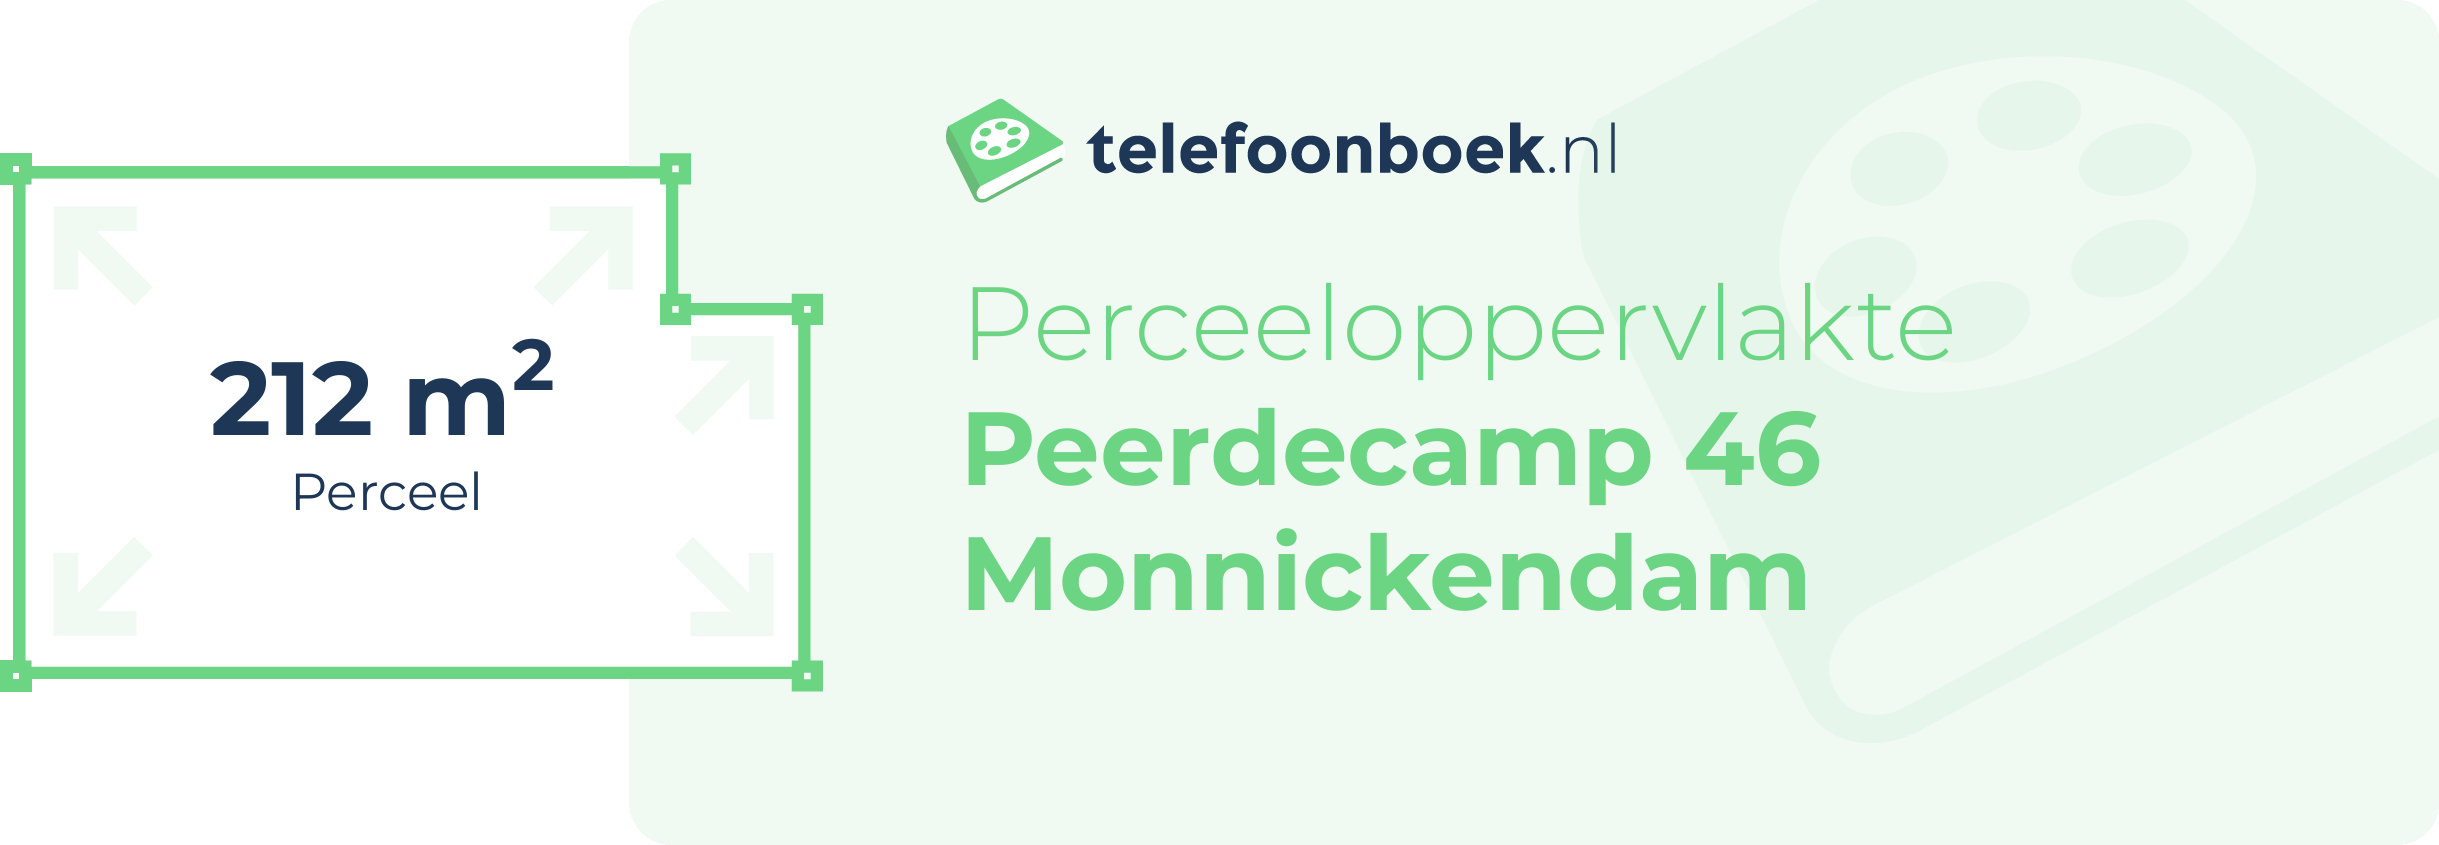 Perceeloppervlakte Peerdecamp 46 Monnickendam